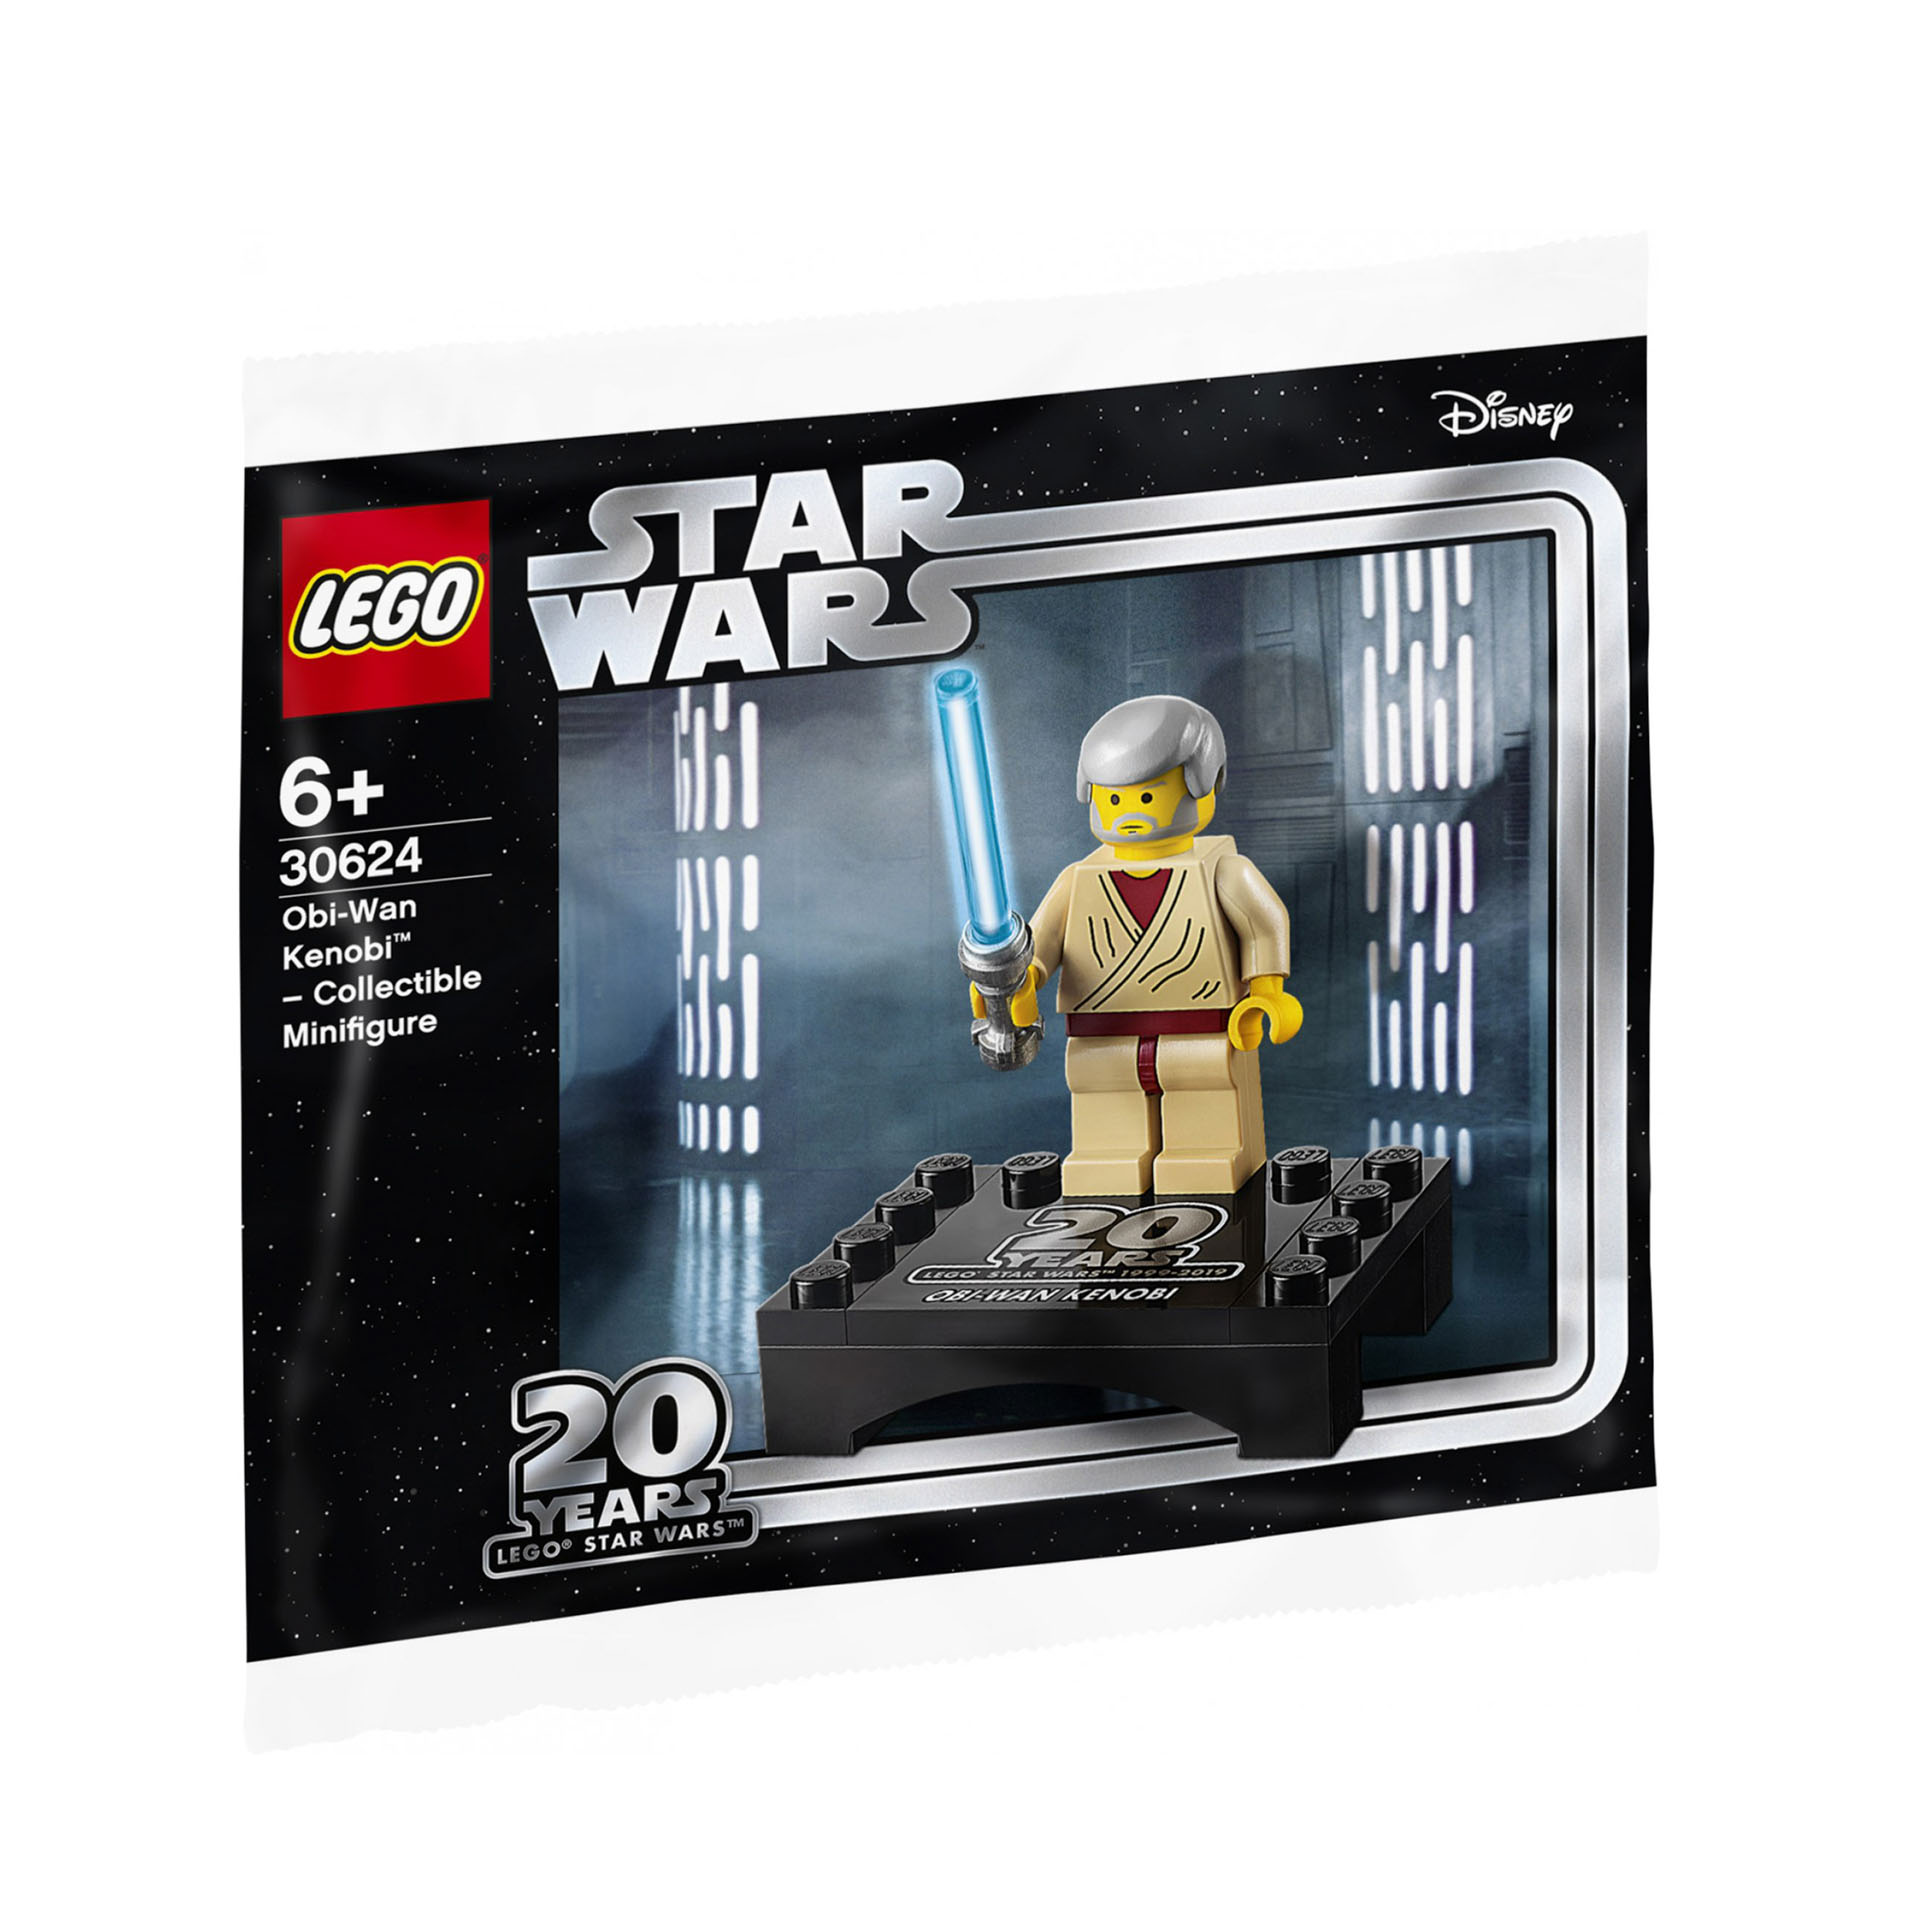 Minifigure da collezione - Obi-Wan Kenobi 30624, , large